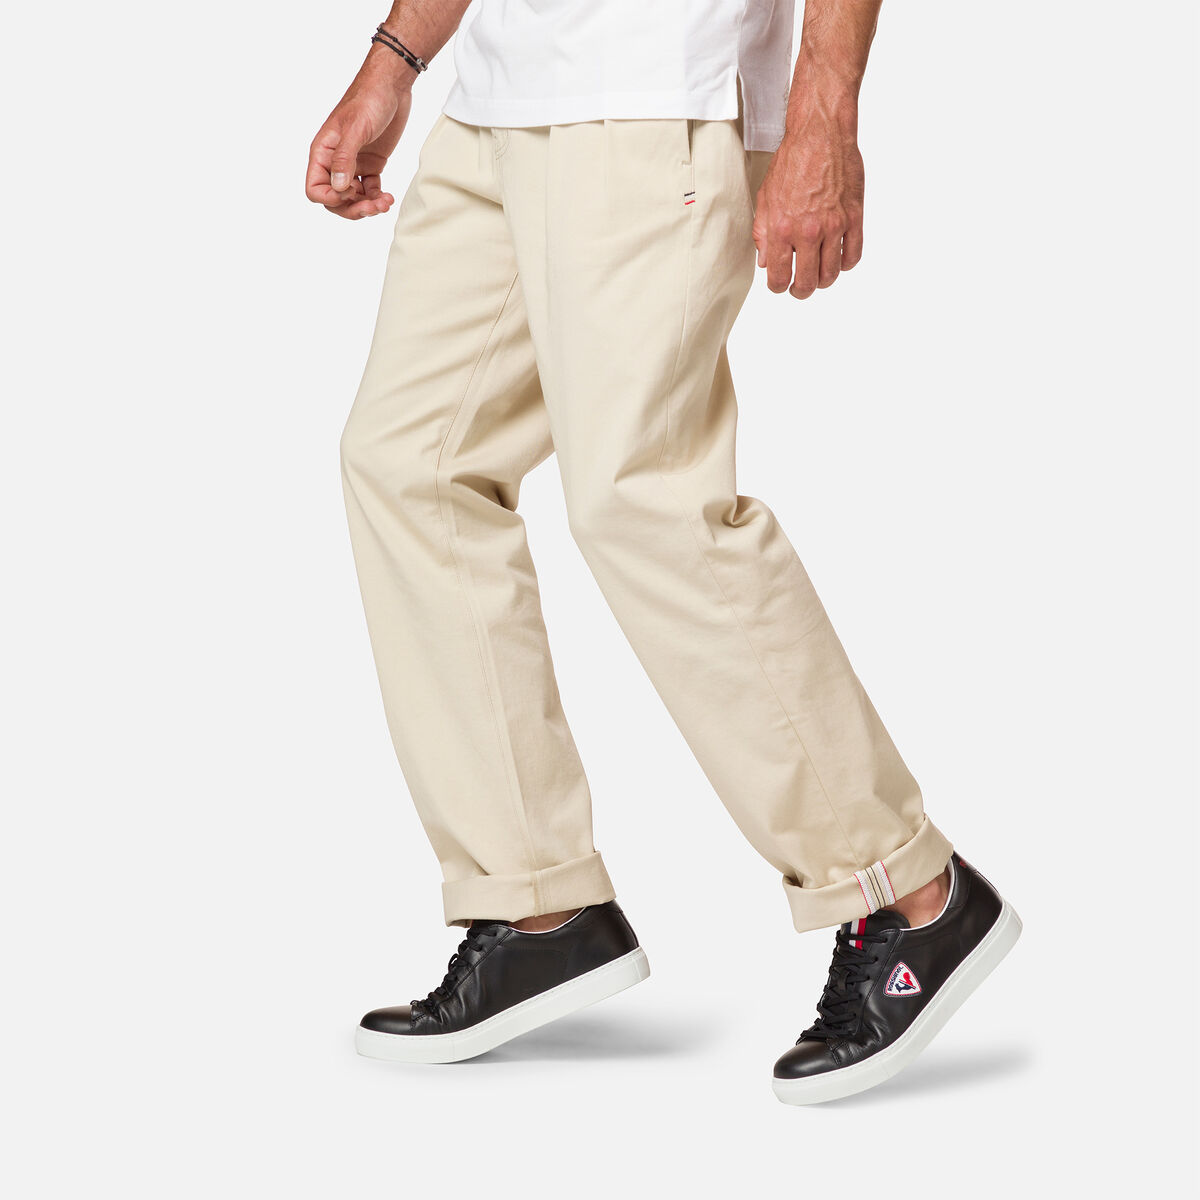 Men's organic cotton chino pants